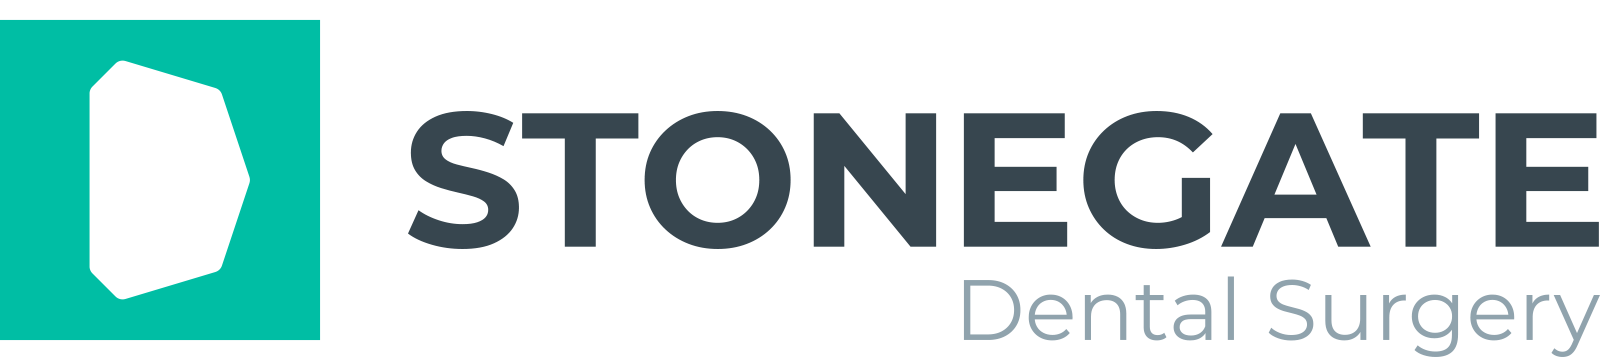 Stonegate Dental logo